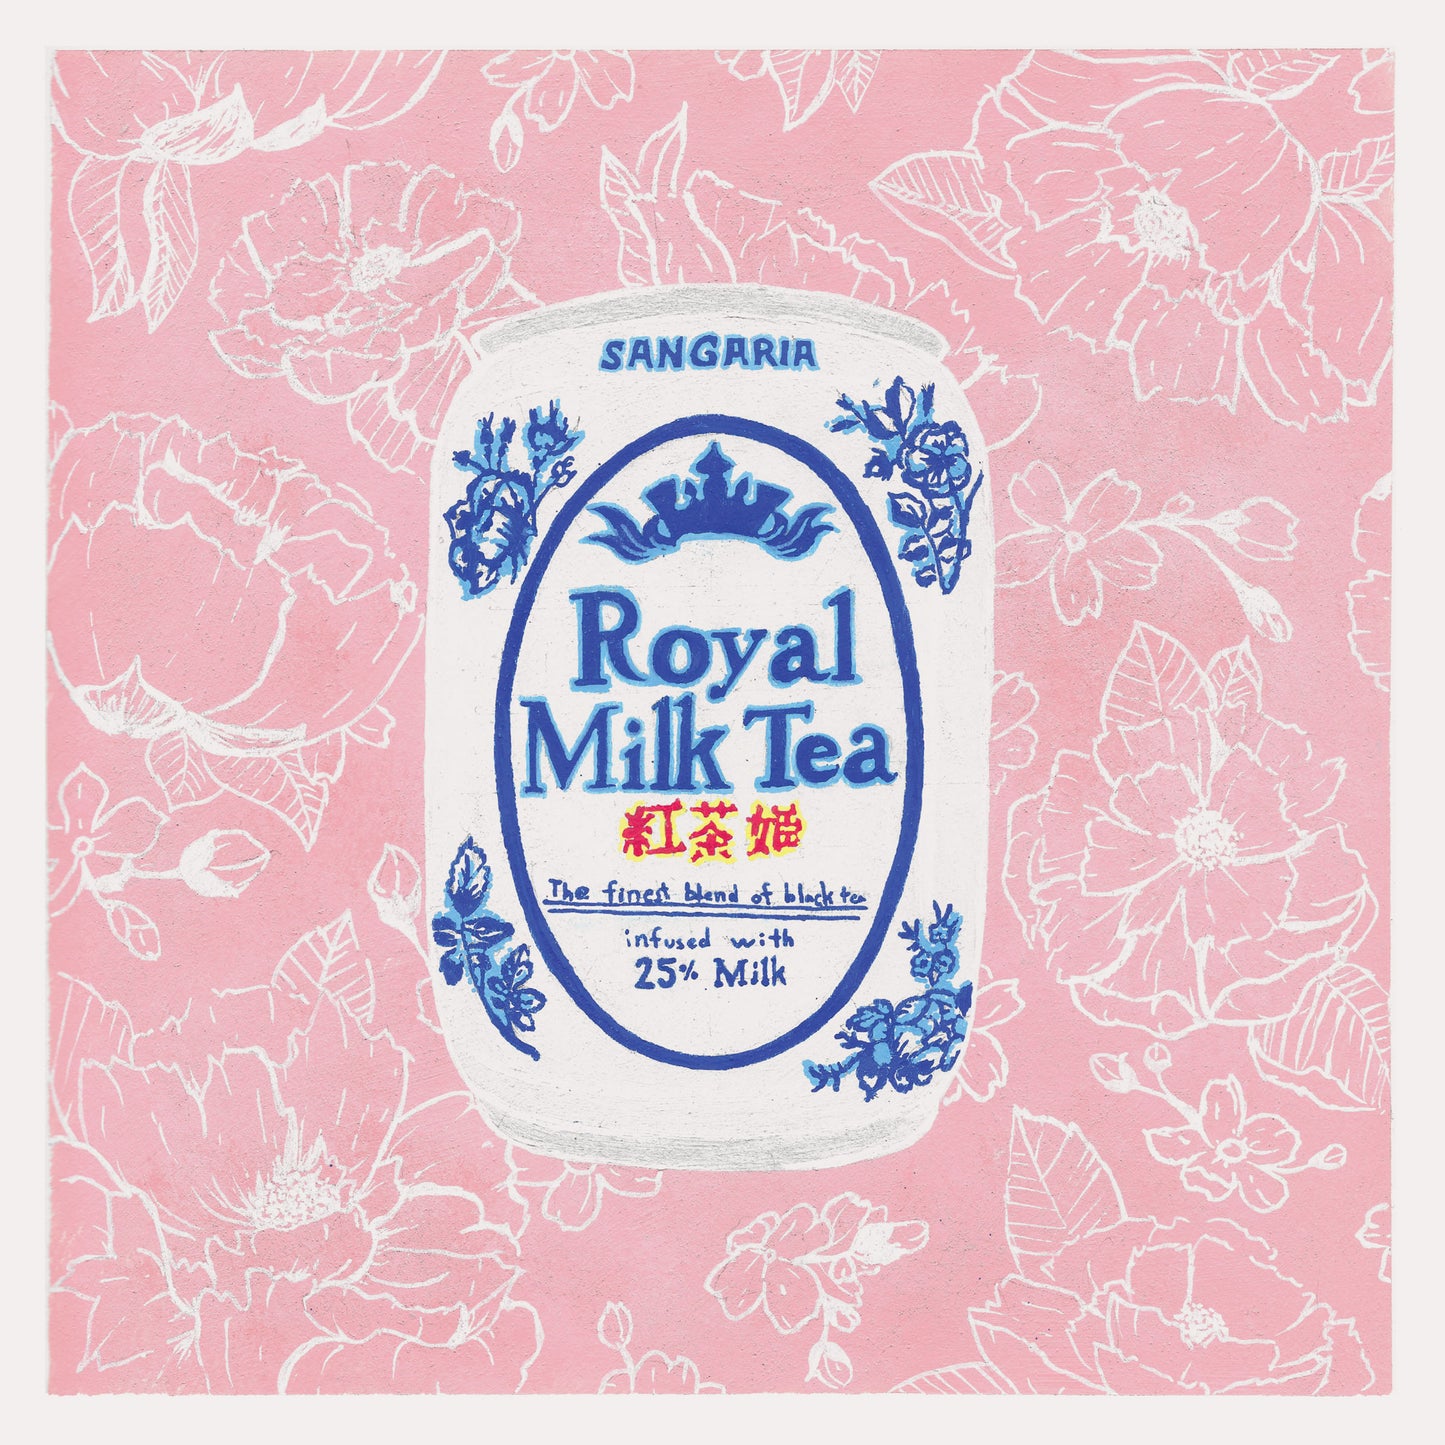 Royal Milk Tea Print